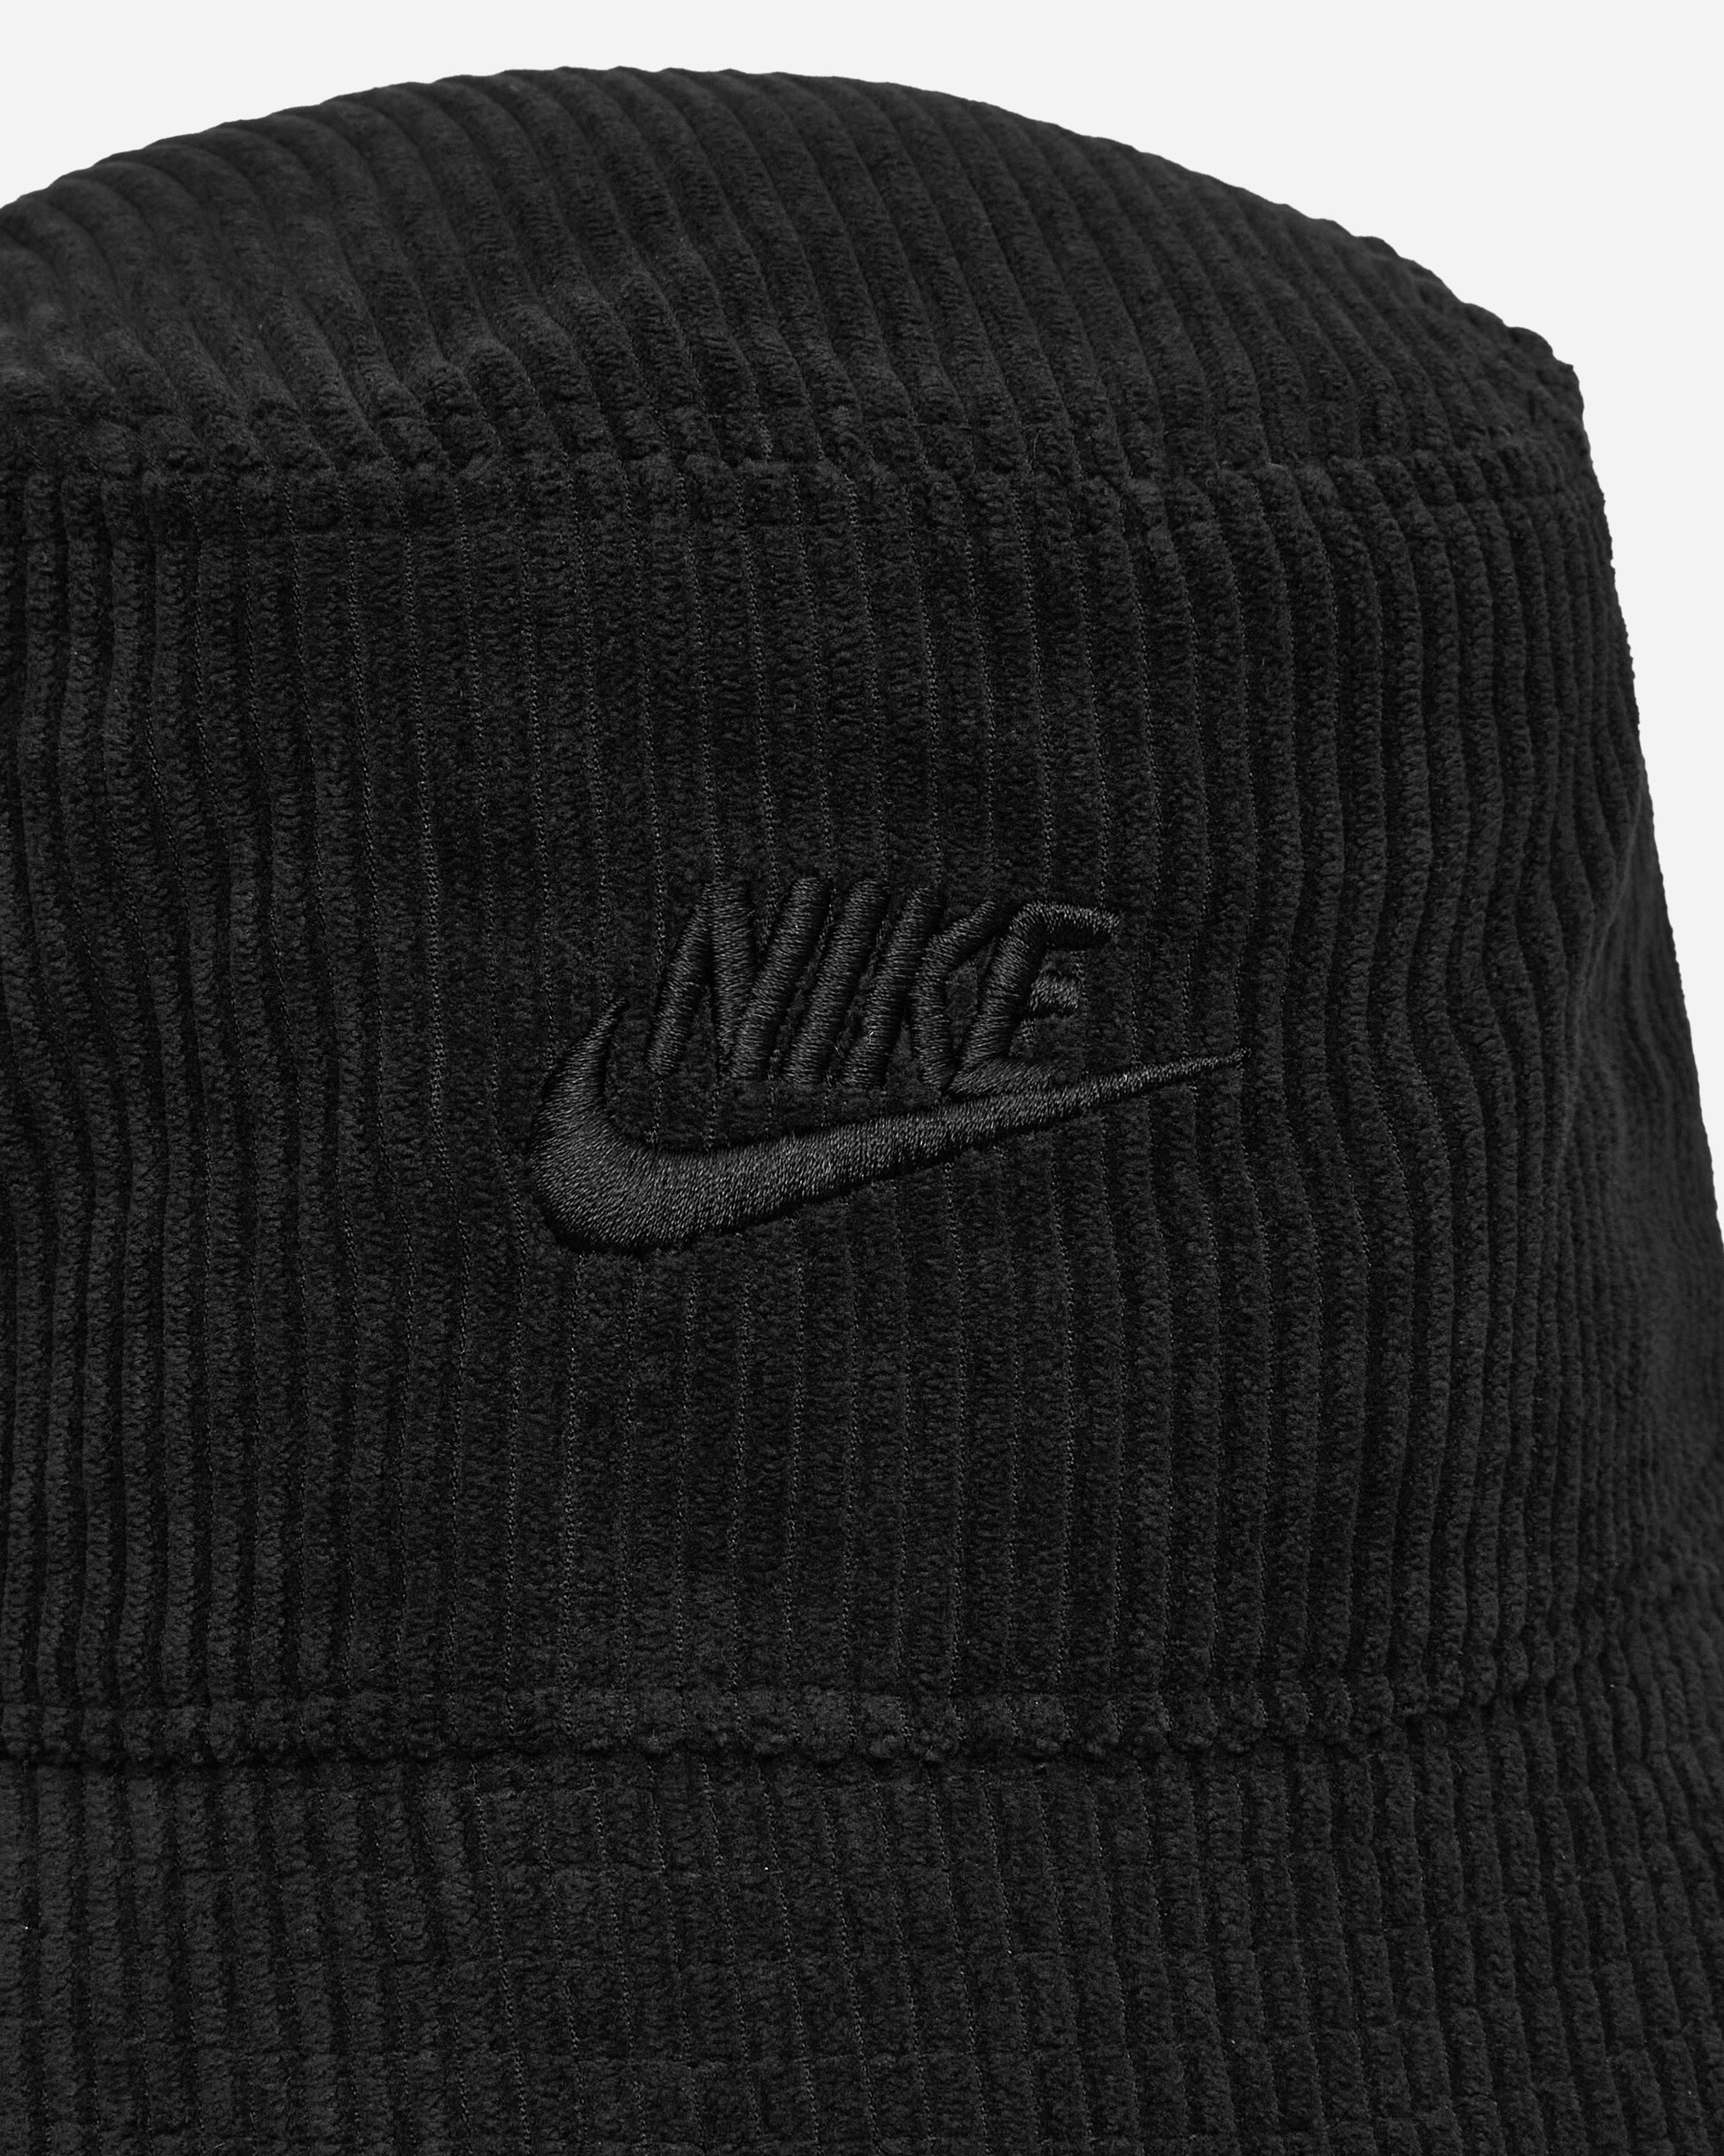 Nike Apex Bucket Sq Cord L Black/Black Hats Bucket FB5385-010